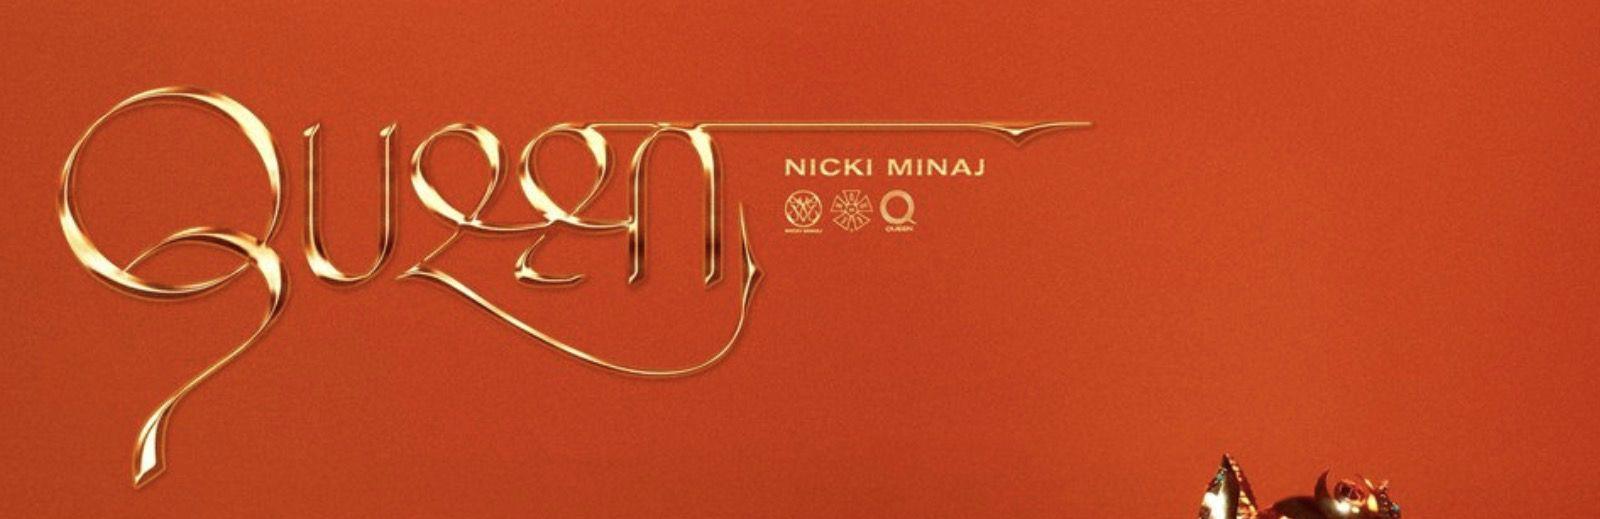 Nicki Minaj Logo - Nicki Minaj hits out at Spotify after Queen album misses #1 in the US